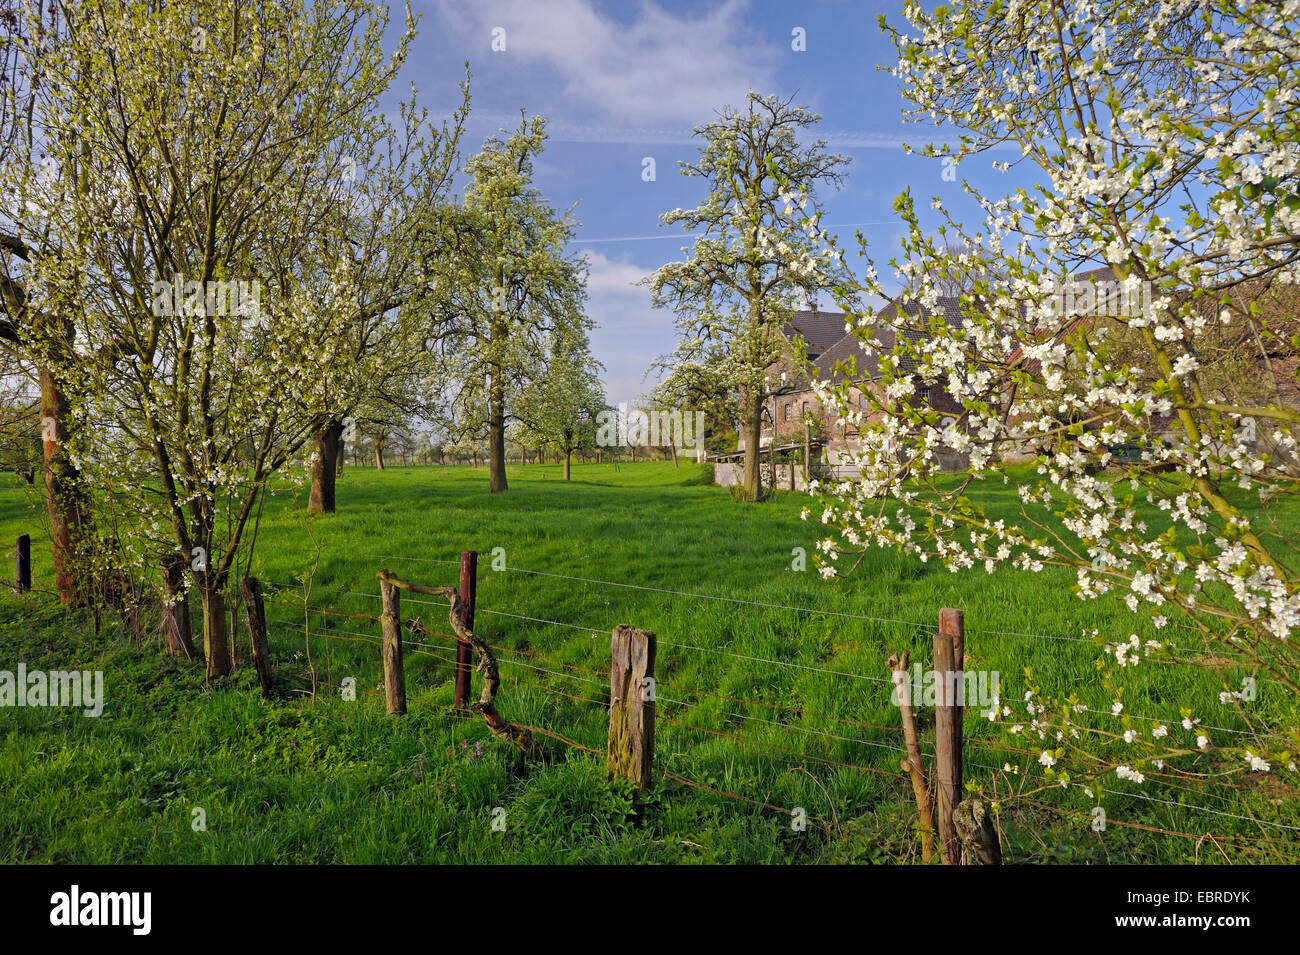 common pear (Pyrus communis), blooming fruit trees in a meadow, Germany, North Rhine-Westphalia, Lower Rhine, Loehnen Stock Photo